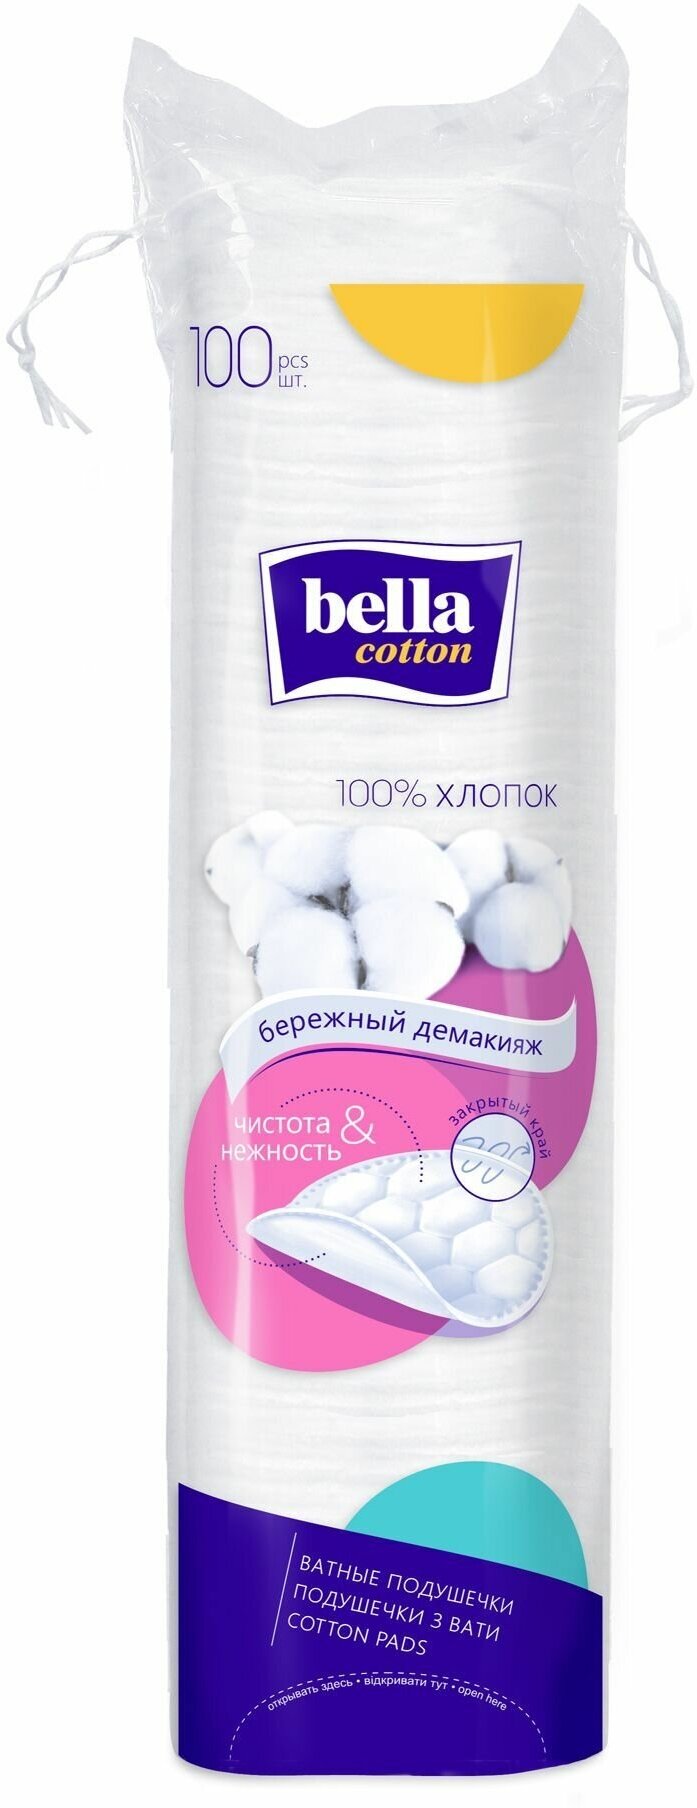 Ватные подушечки "bella cotton" по 120 шт ООО Белла - фото №6